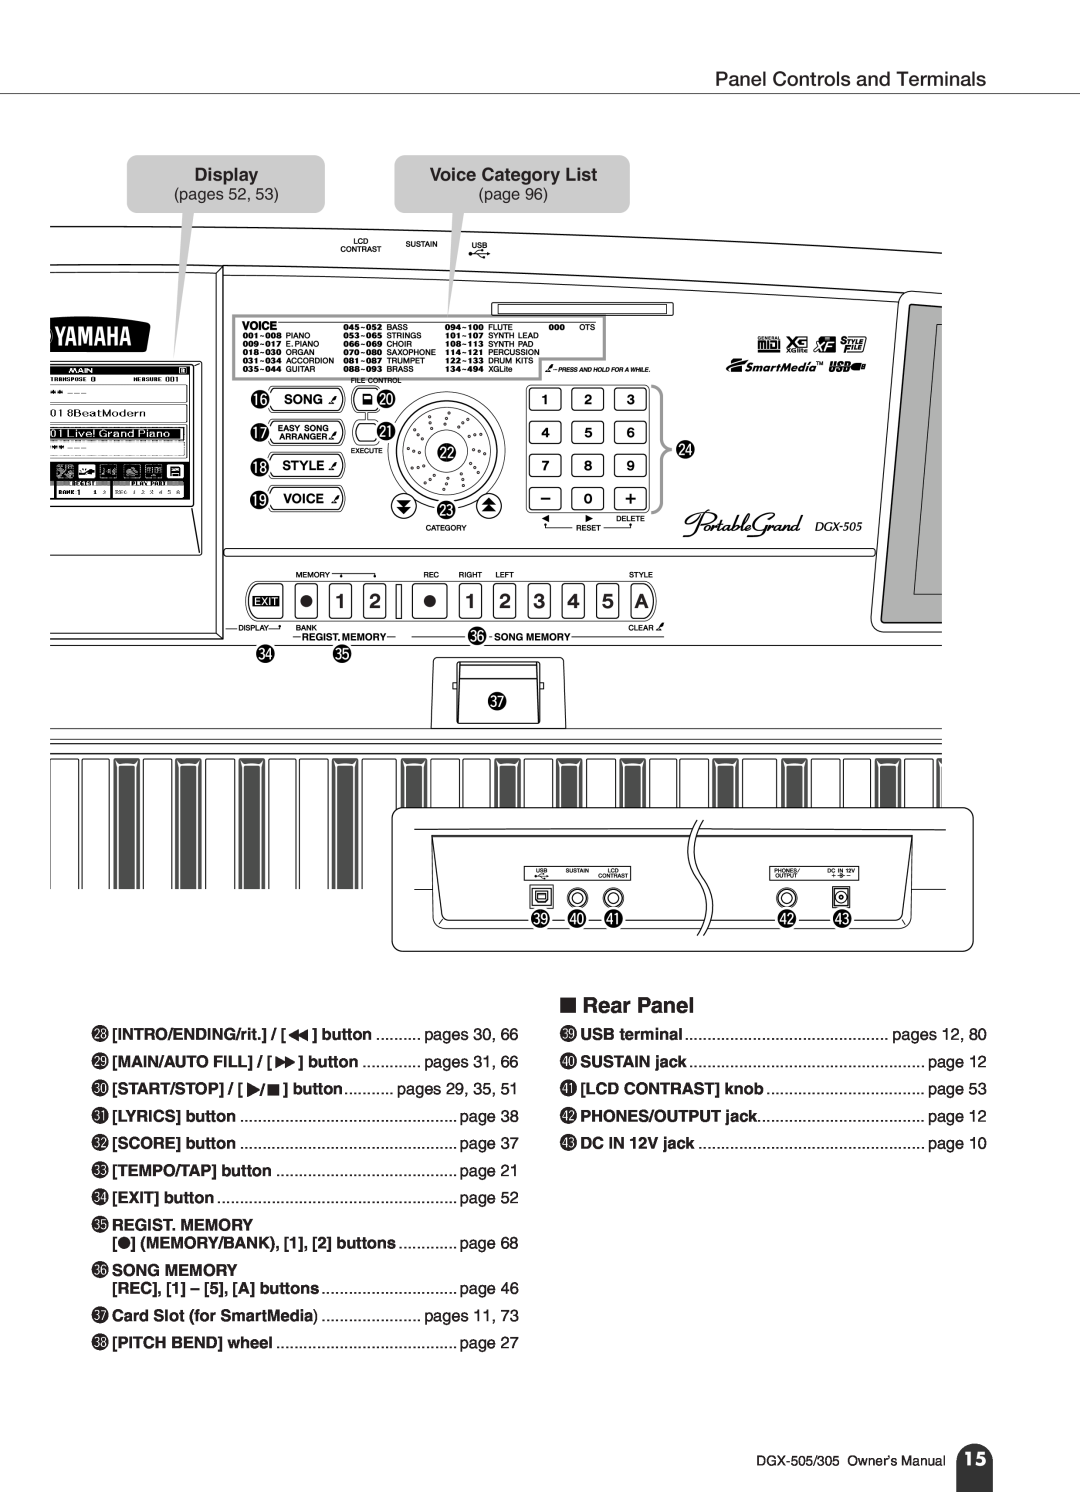 Yamaha DGX-305 Rear Panel, Panel Controls and Terminals, 6 @0 7 @1 !8 !9 #4 #5, @2@4 @3 #6 #7, #9 $0, Display, pages 30 